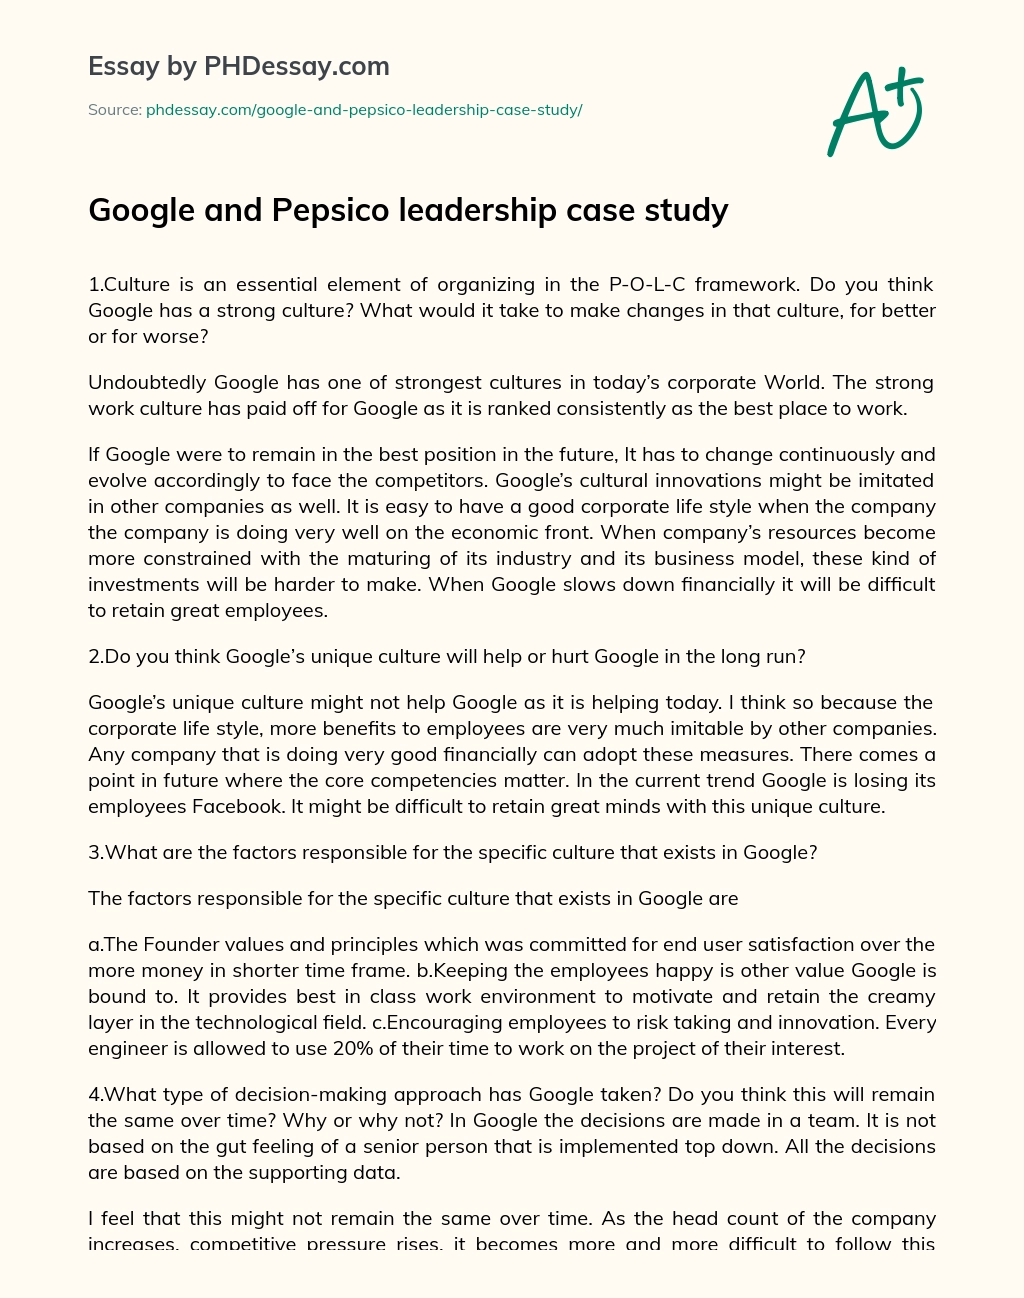 Google and PepsiCo Leadership Case Study essay